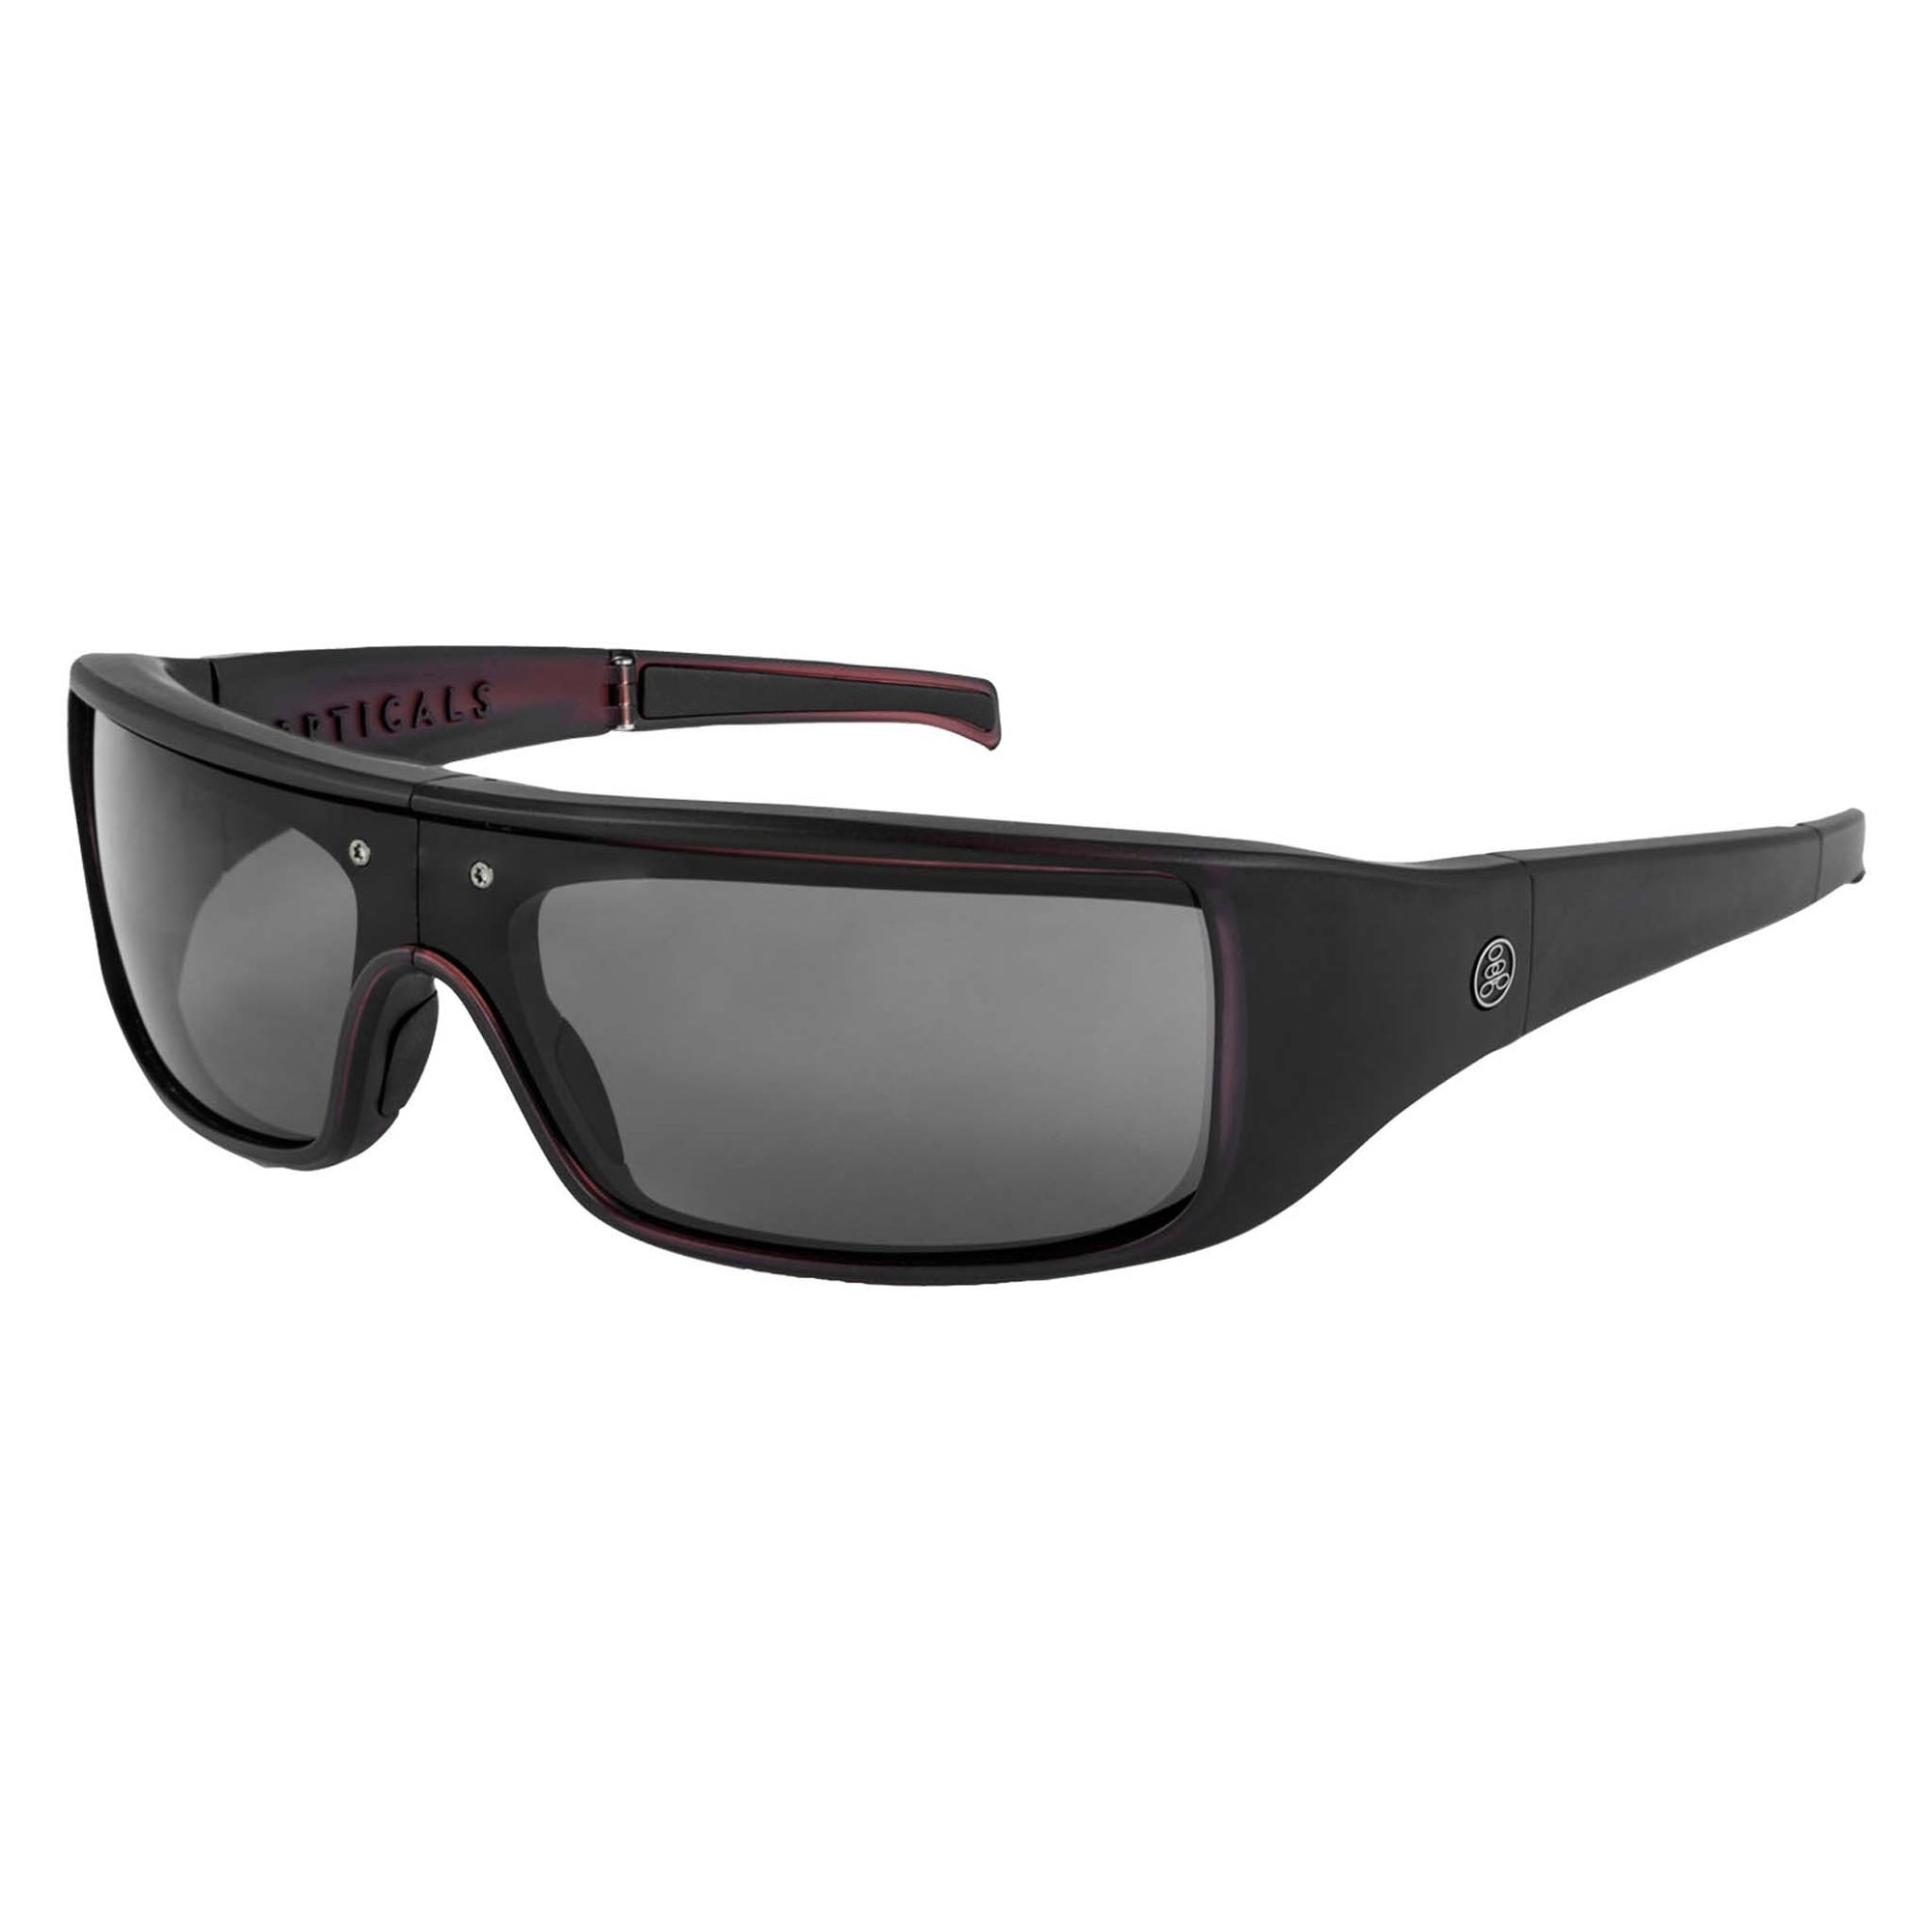 Popticals, Premium Compact Sunglasses, PopGear, 030050-LEGP, Polarized Sunglasses, Gloss Wine/Black Crystal Frame, Gray Lenses, Glam View